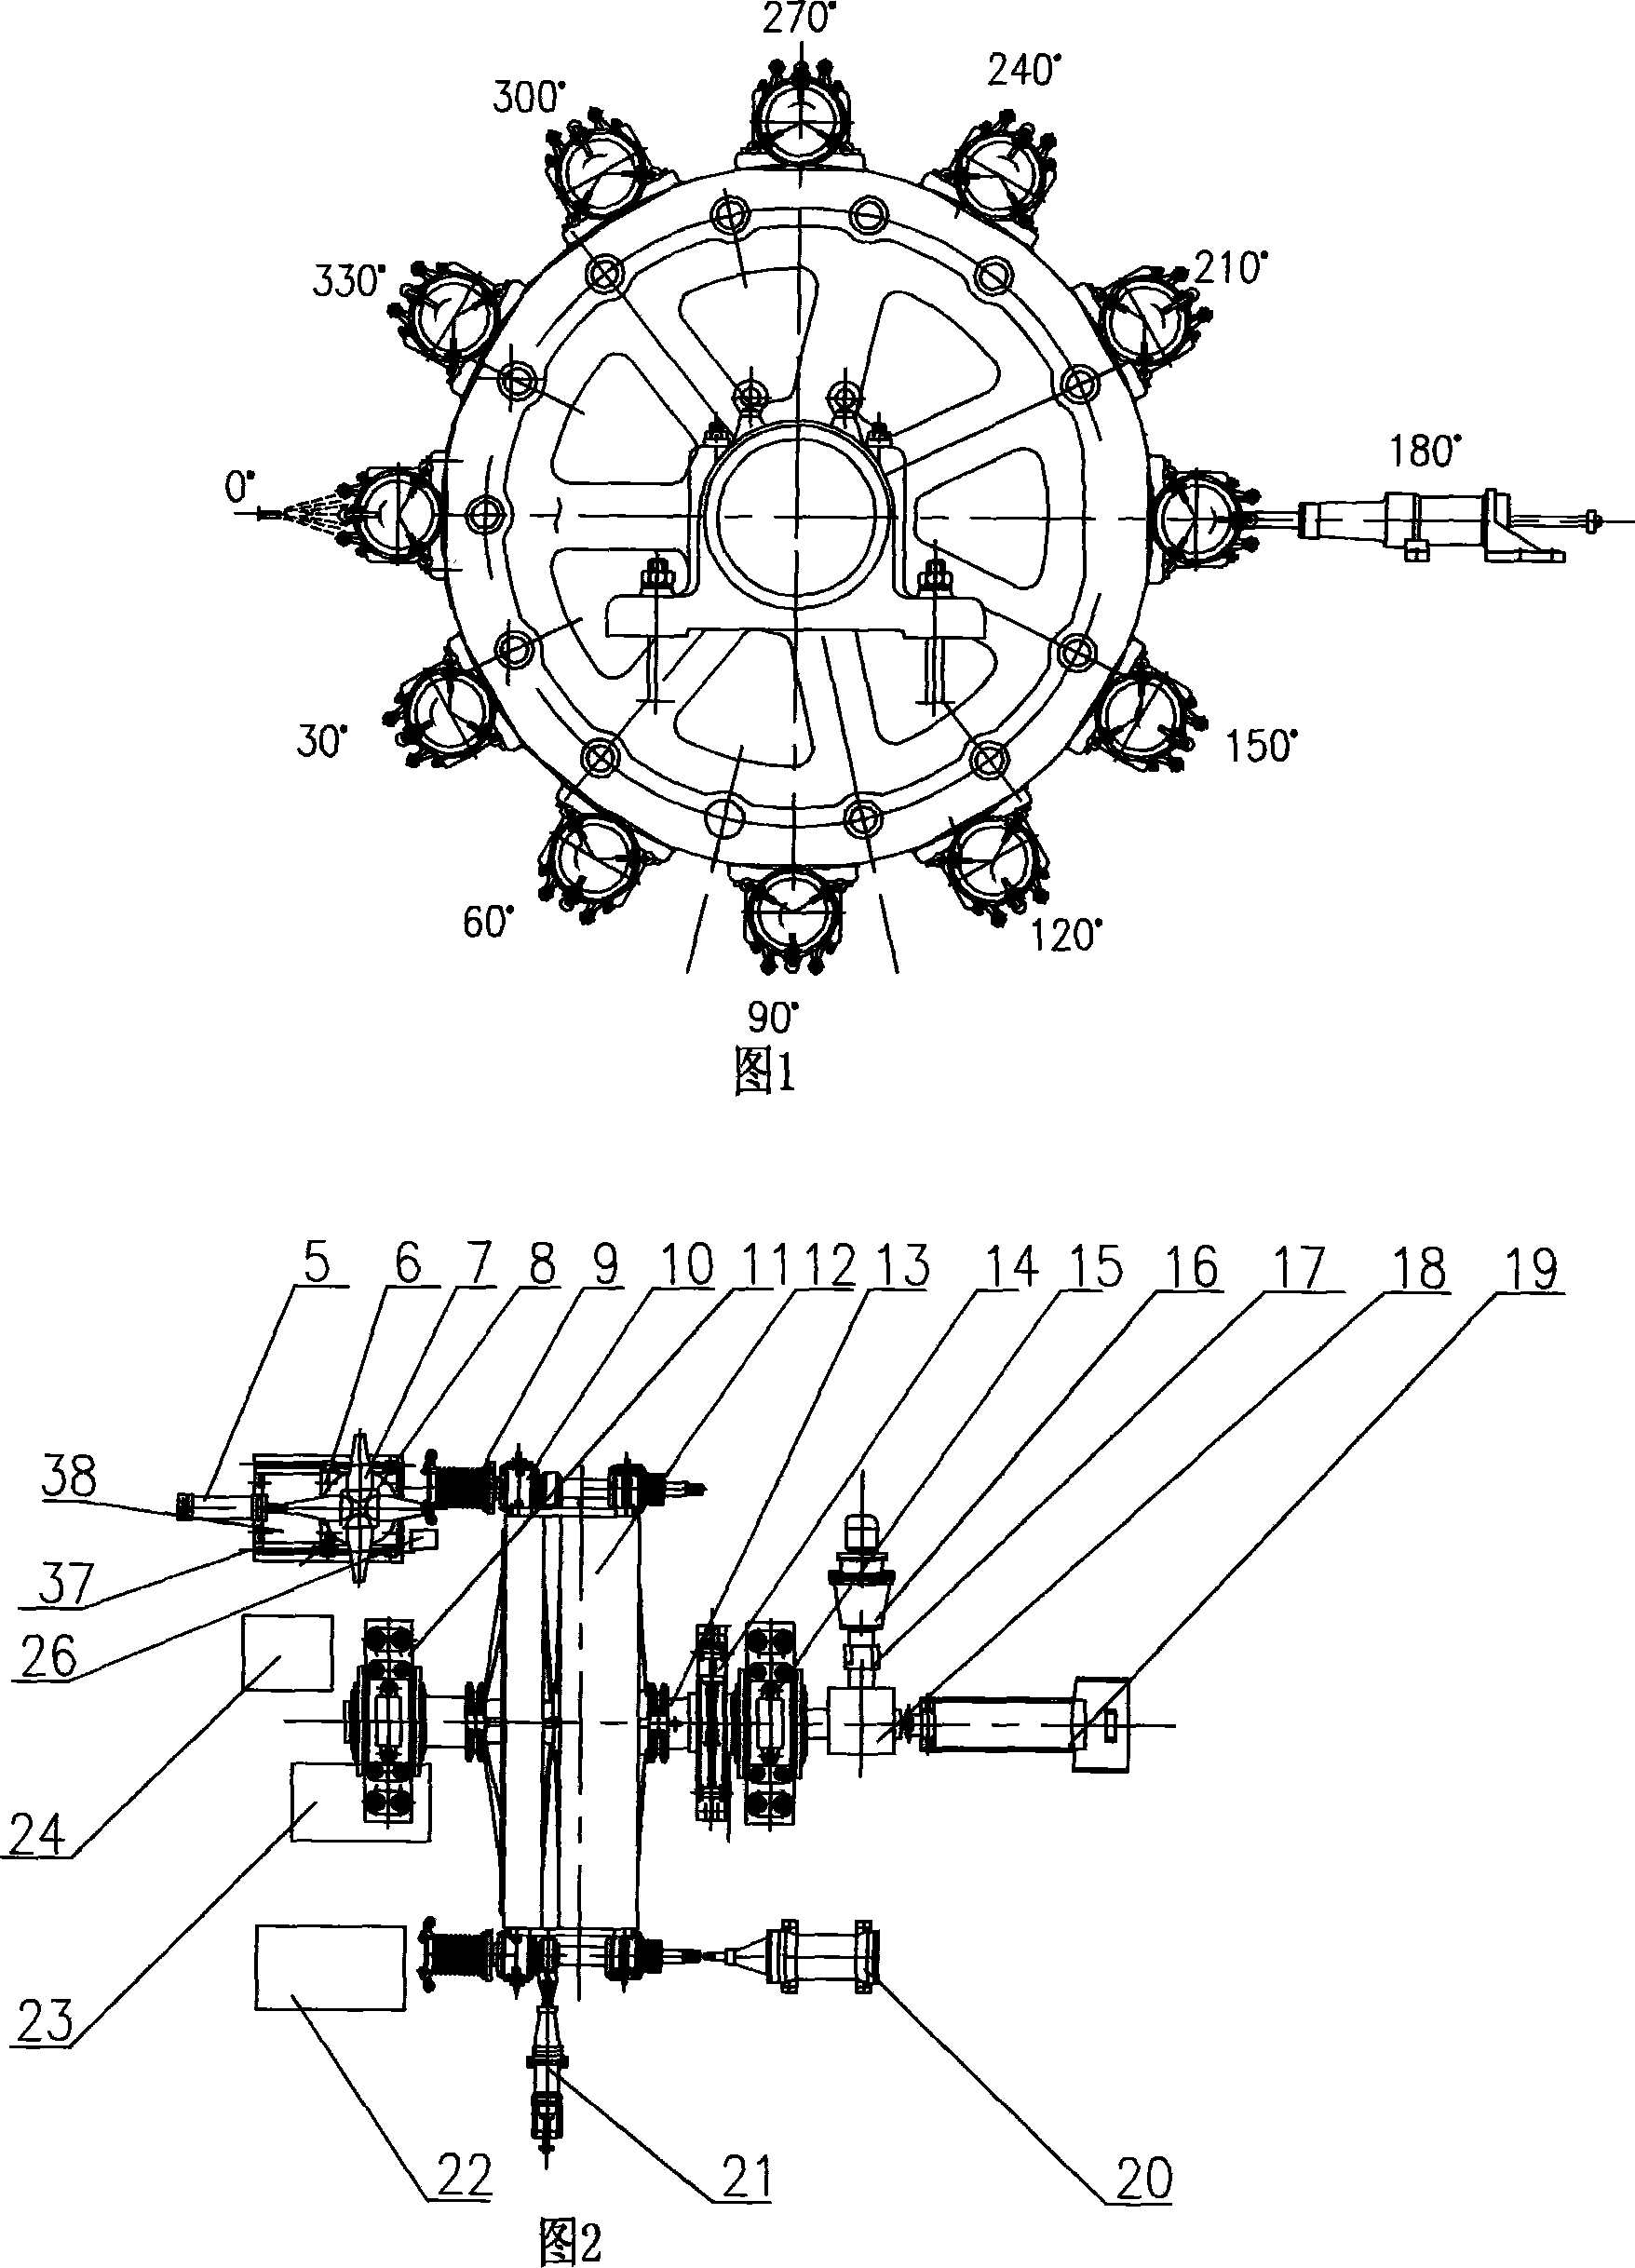 Full-automatic twelve-station centrifugal casting machine